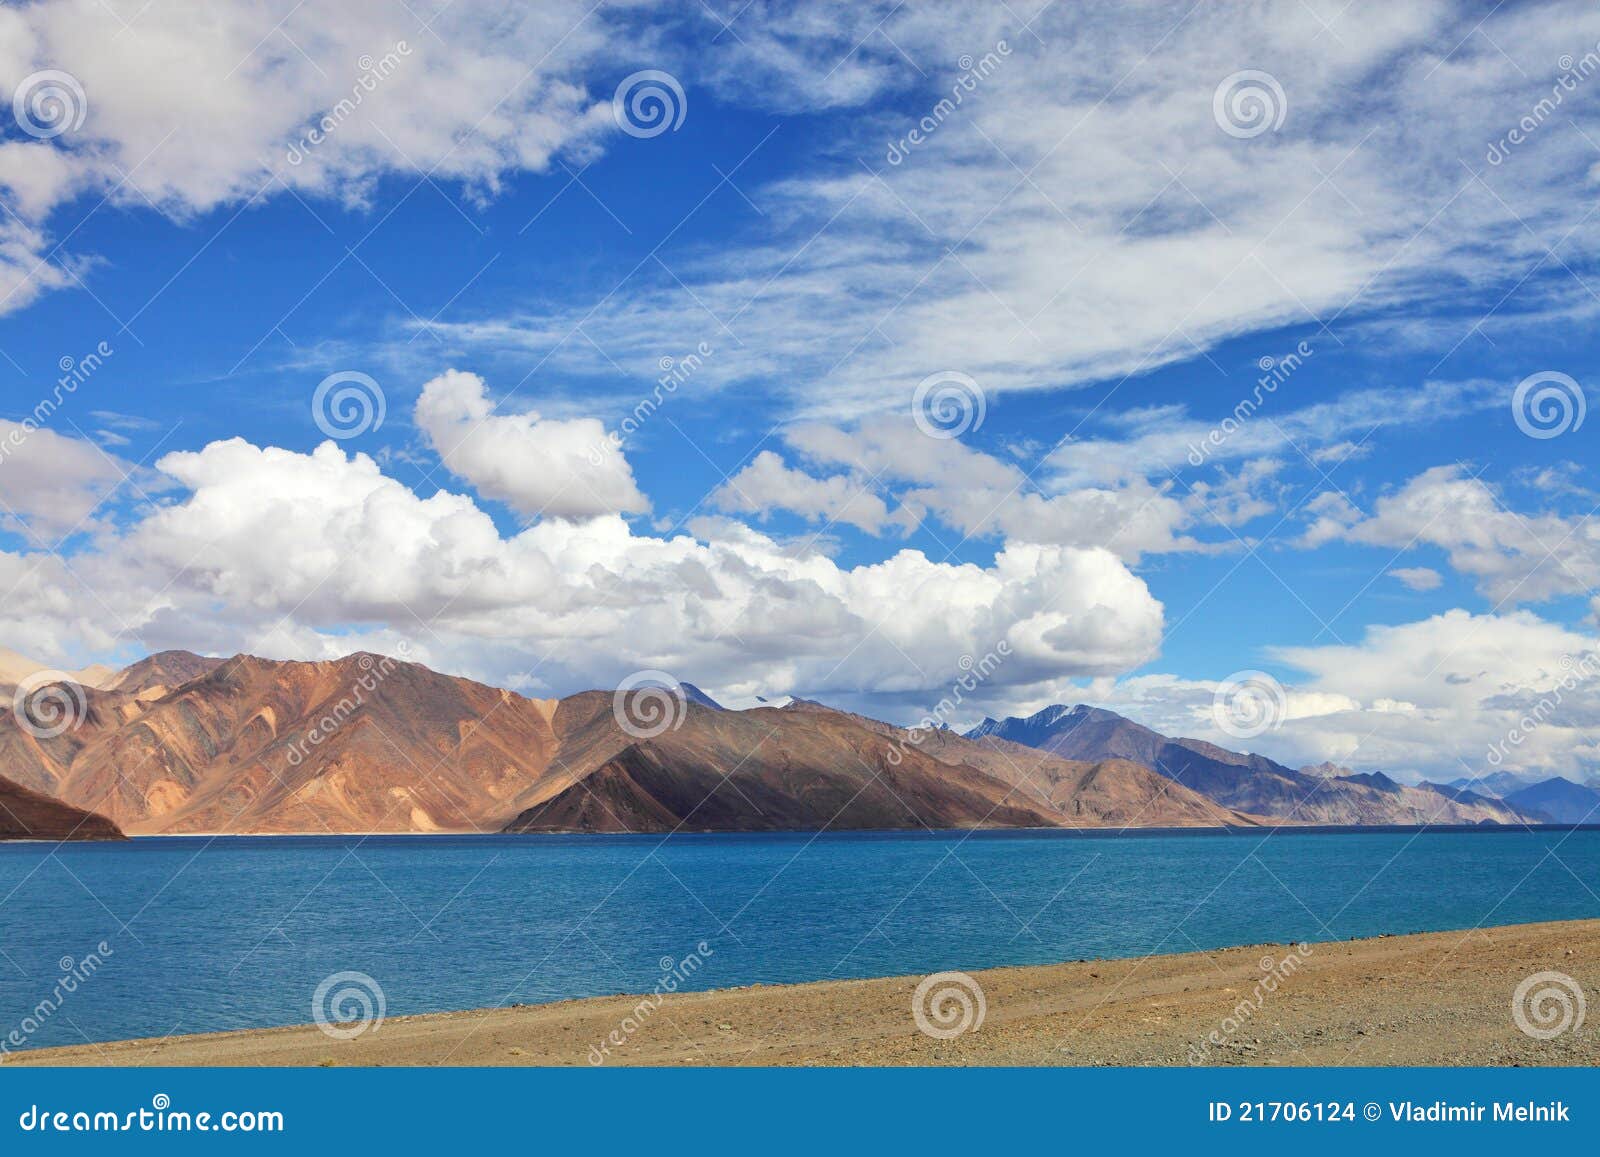 pongong tso lake, ladakh, jammu & kashmir, india